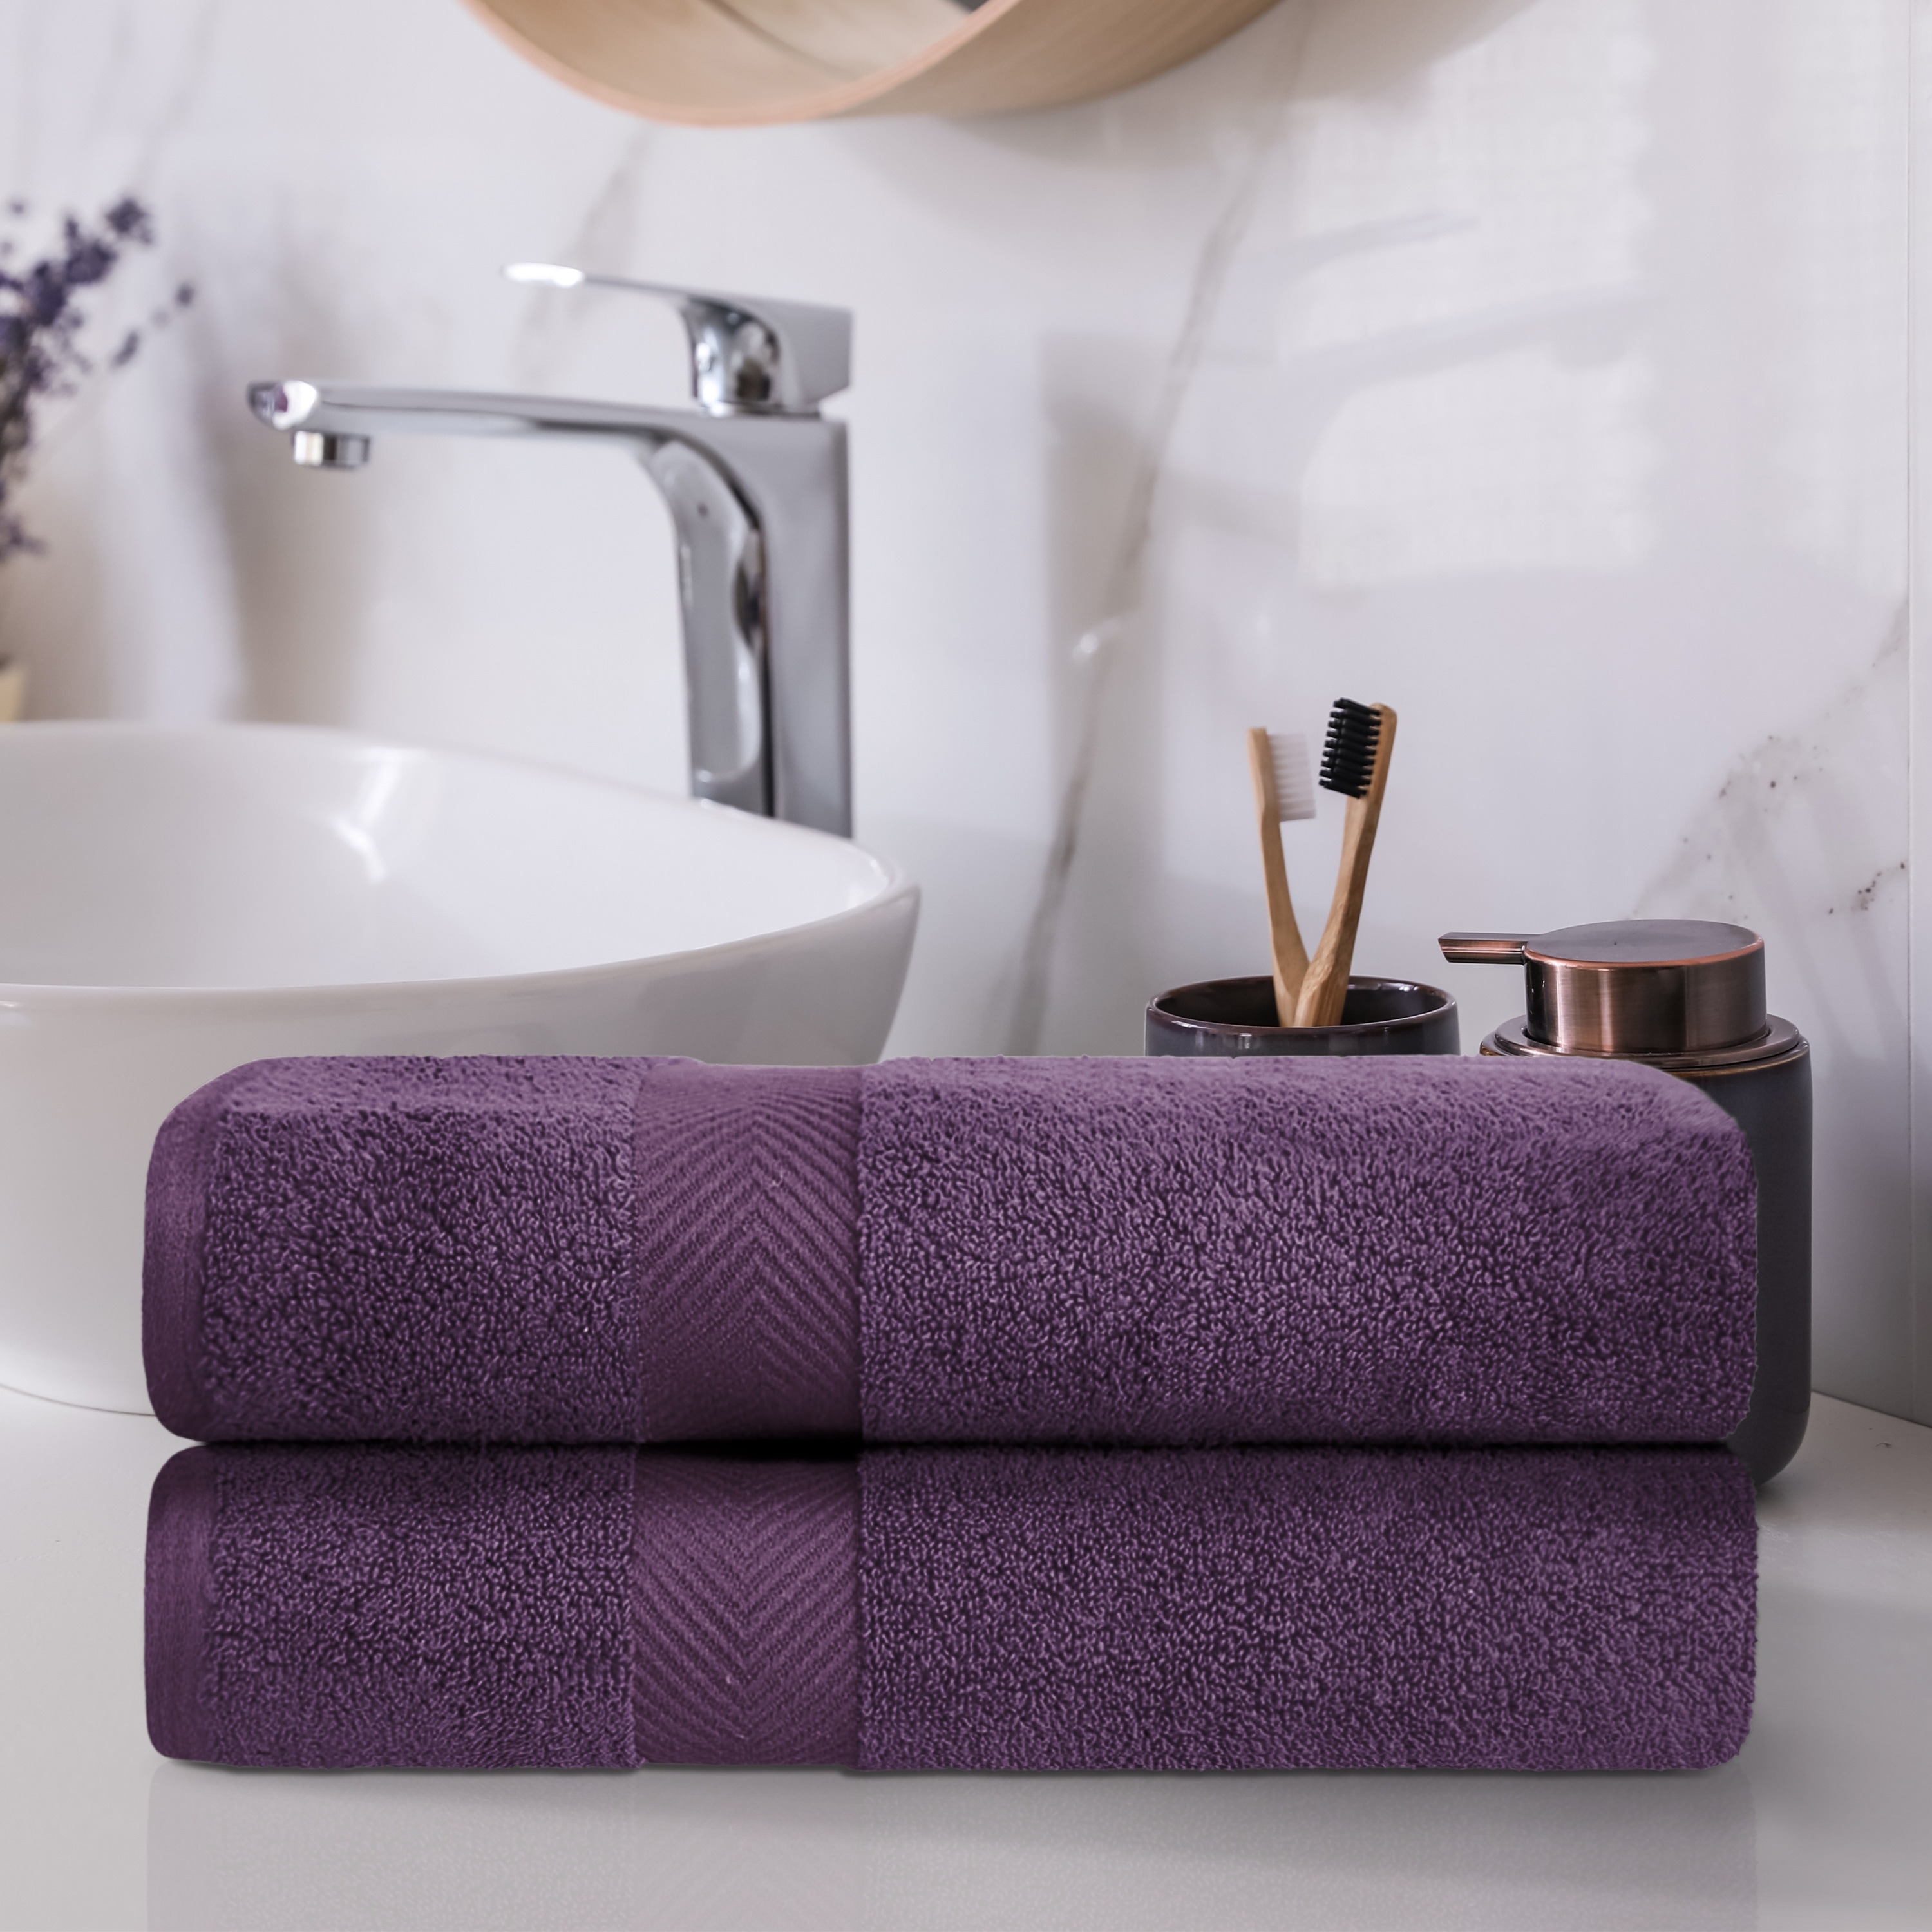 https://ak1.ostkcdn.com/images/products/is/images/direct/3e1a2449eadff905082cea23323155d5c7b7d1ed/Miranda-Haus-Absorbent-Zero-Twist-Cotton-Bath-Towel-%28Set-of-2%29.jpg